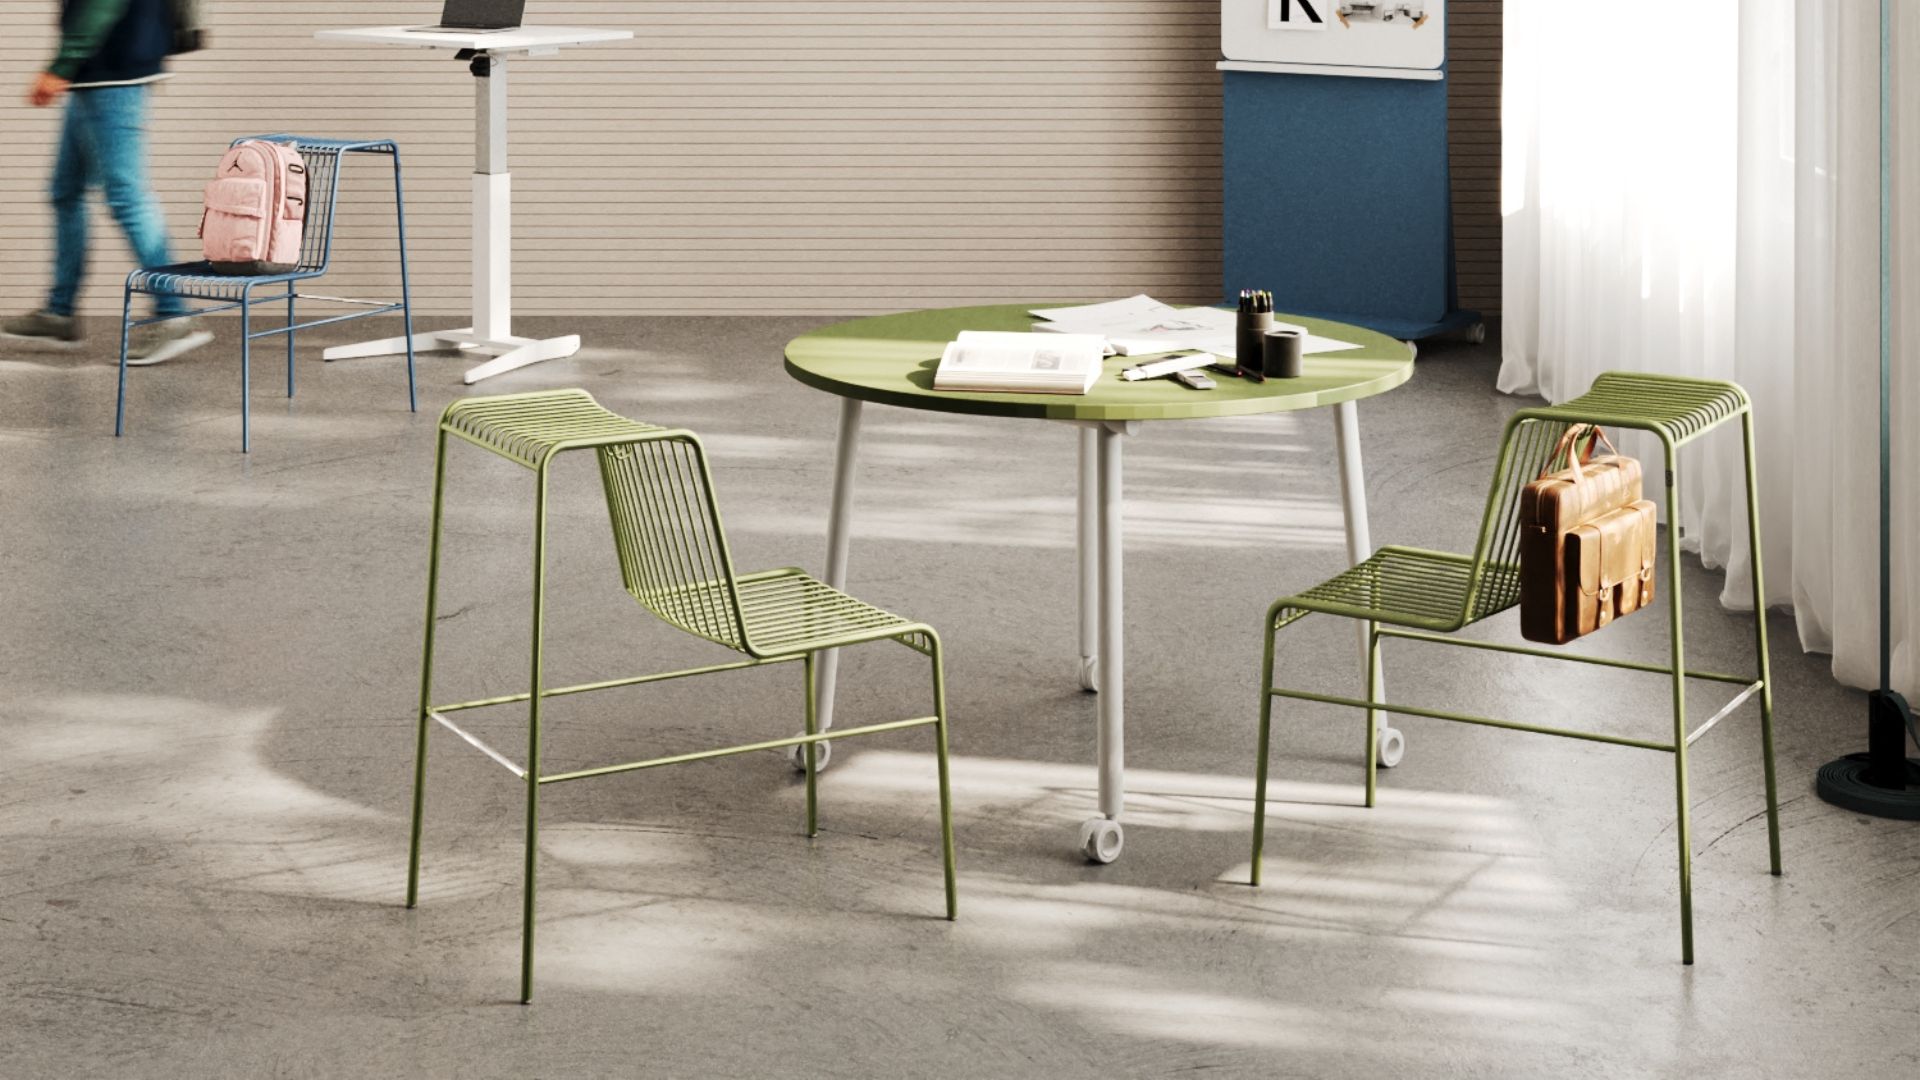 Sello-chair-stool-by-Antonio-Lanzillo-for-LAS-Mobili-multifunctional-design-cover